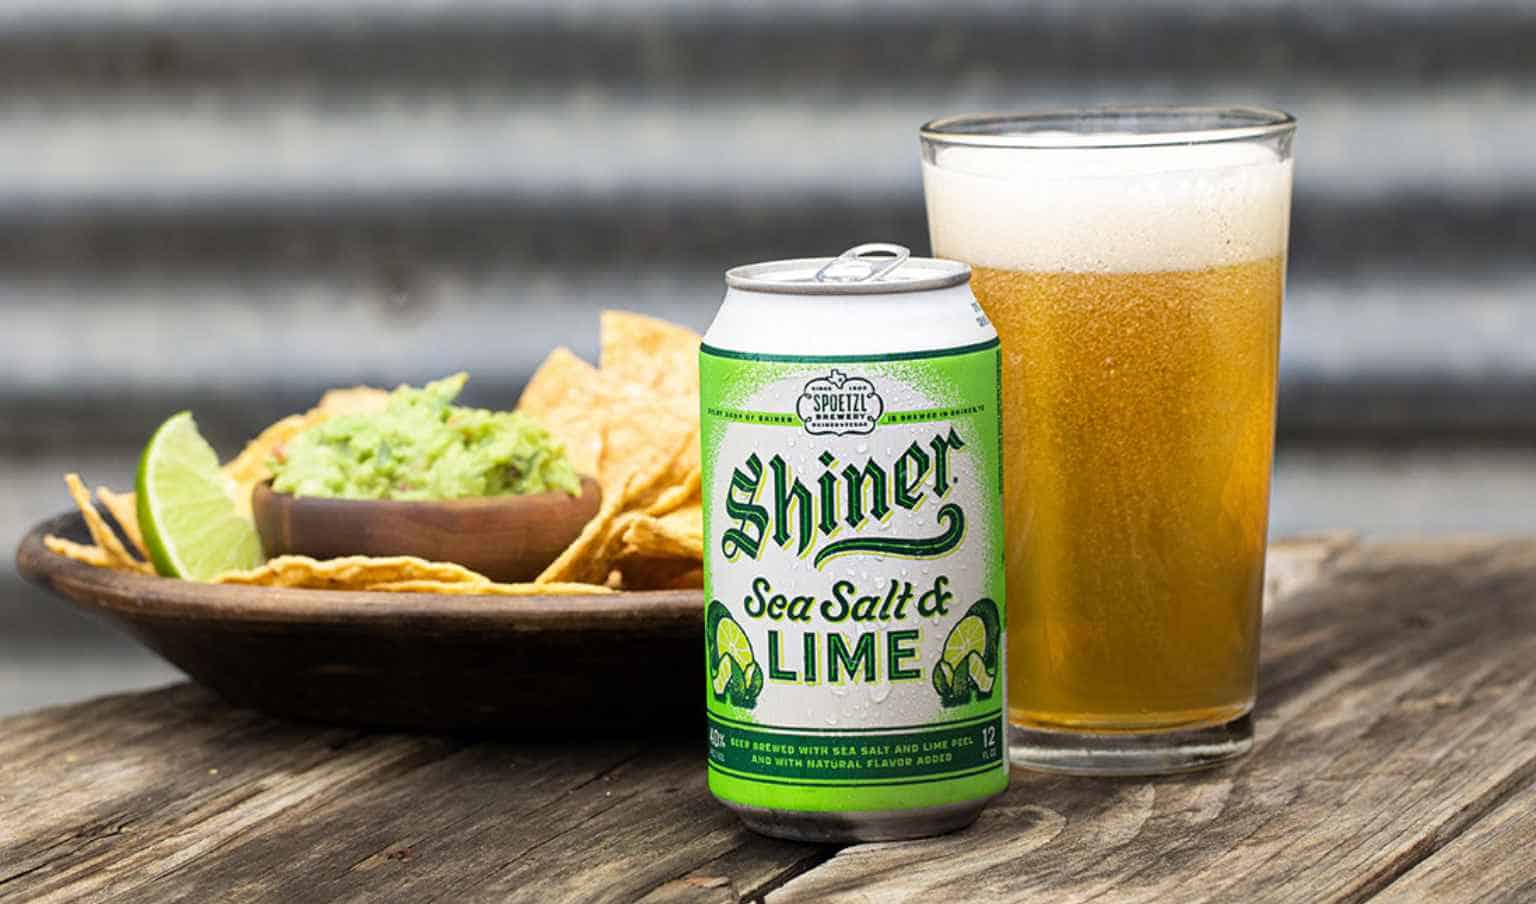 Sea Salt & Lime by Shiner